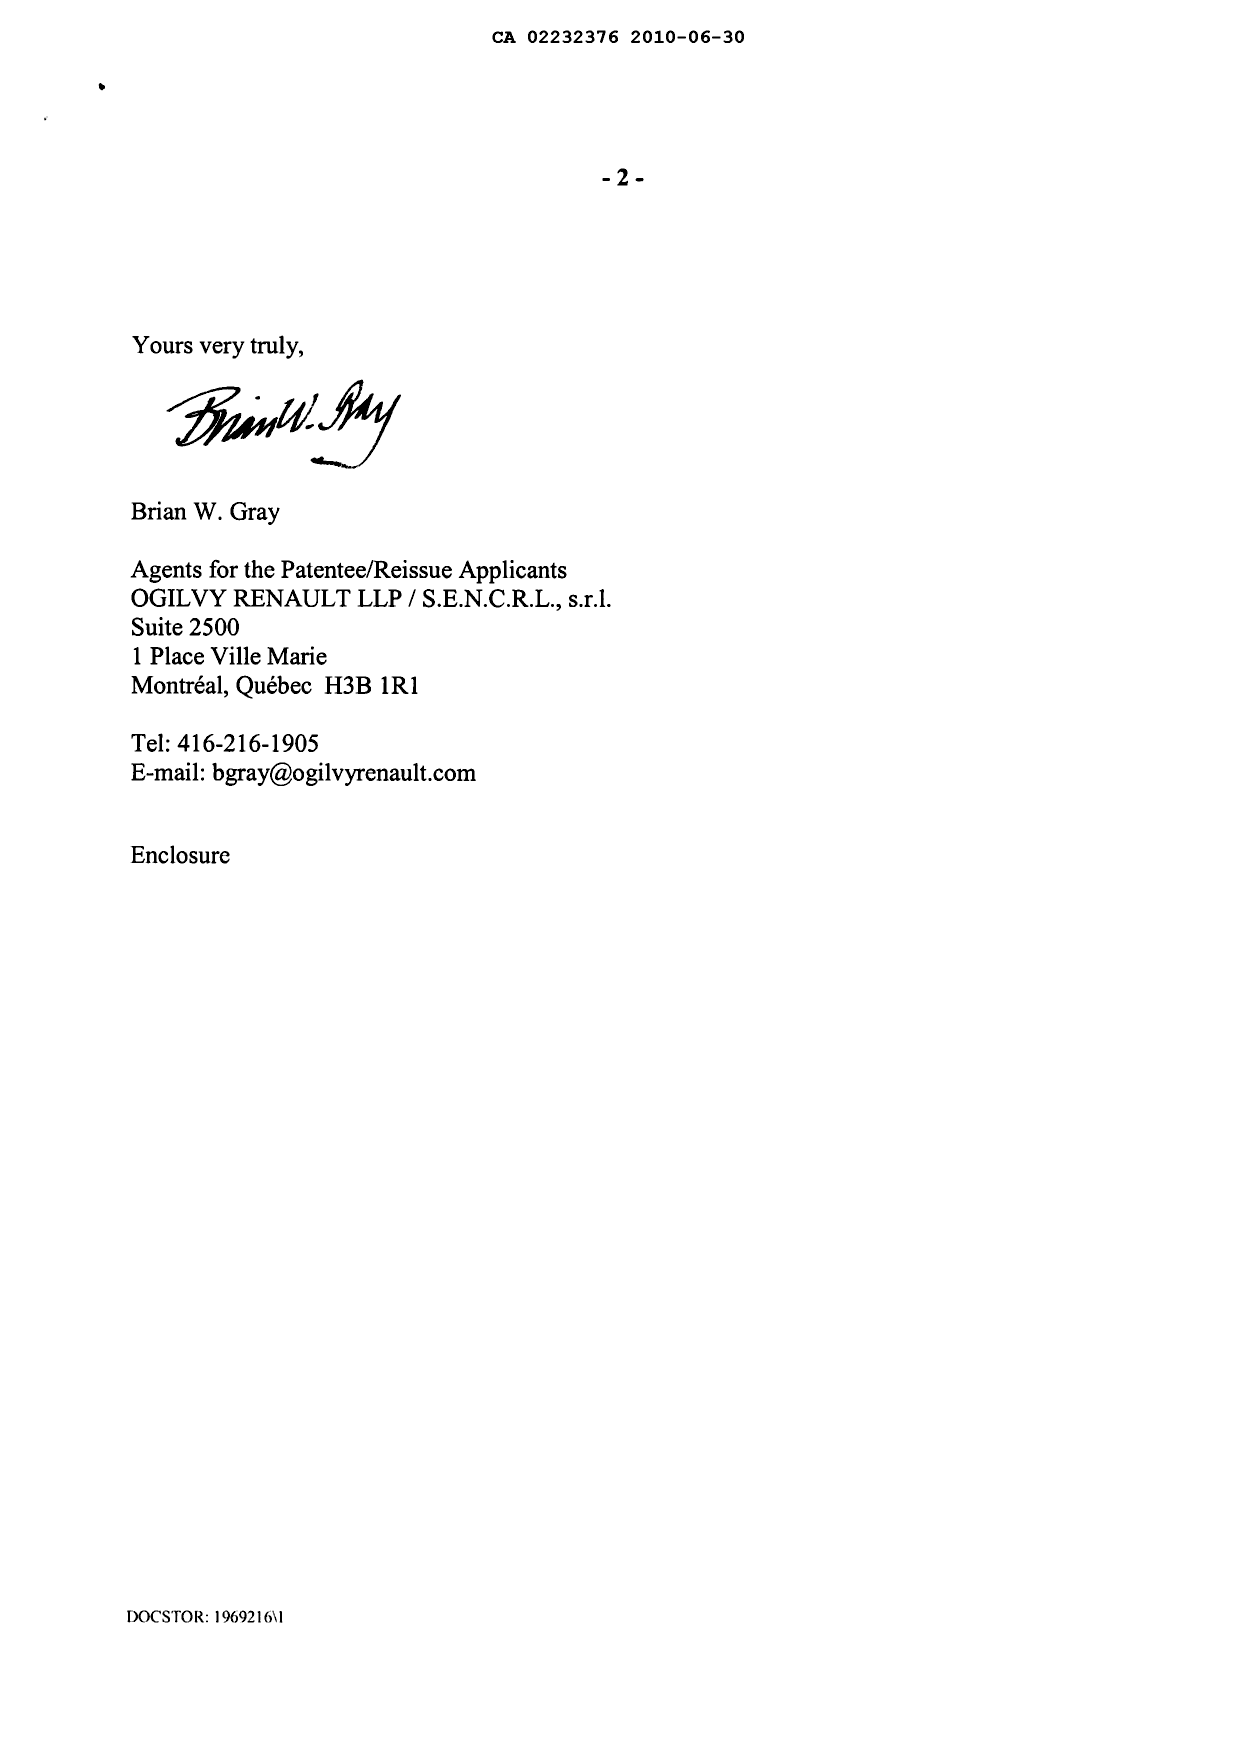 Canadian Patent Document 2232376. Correspondence 20091230. Image 2 of 2